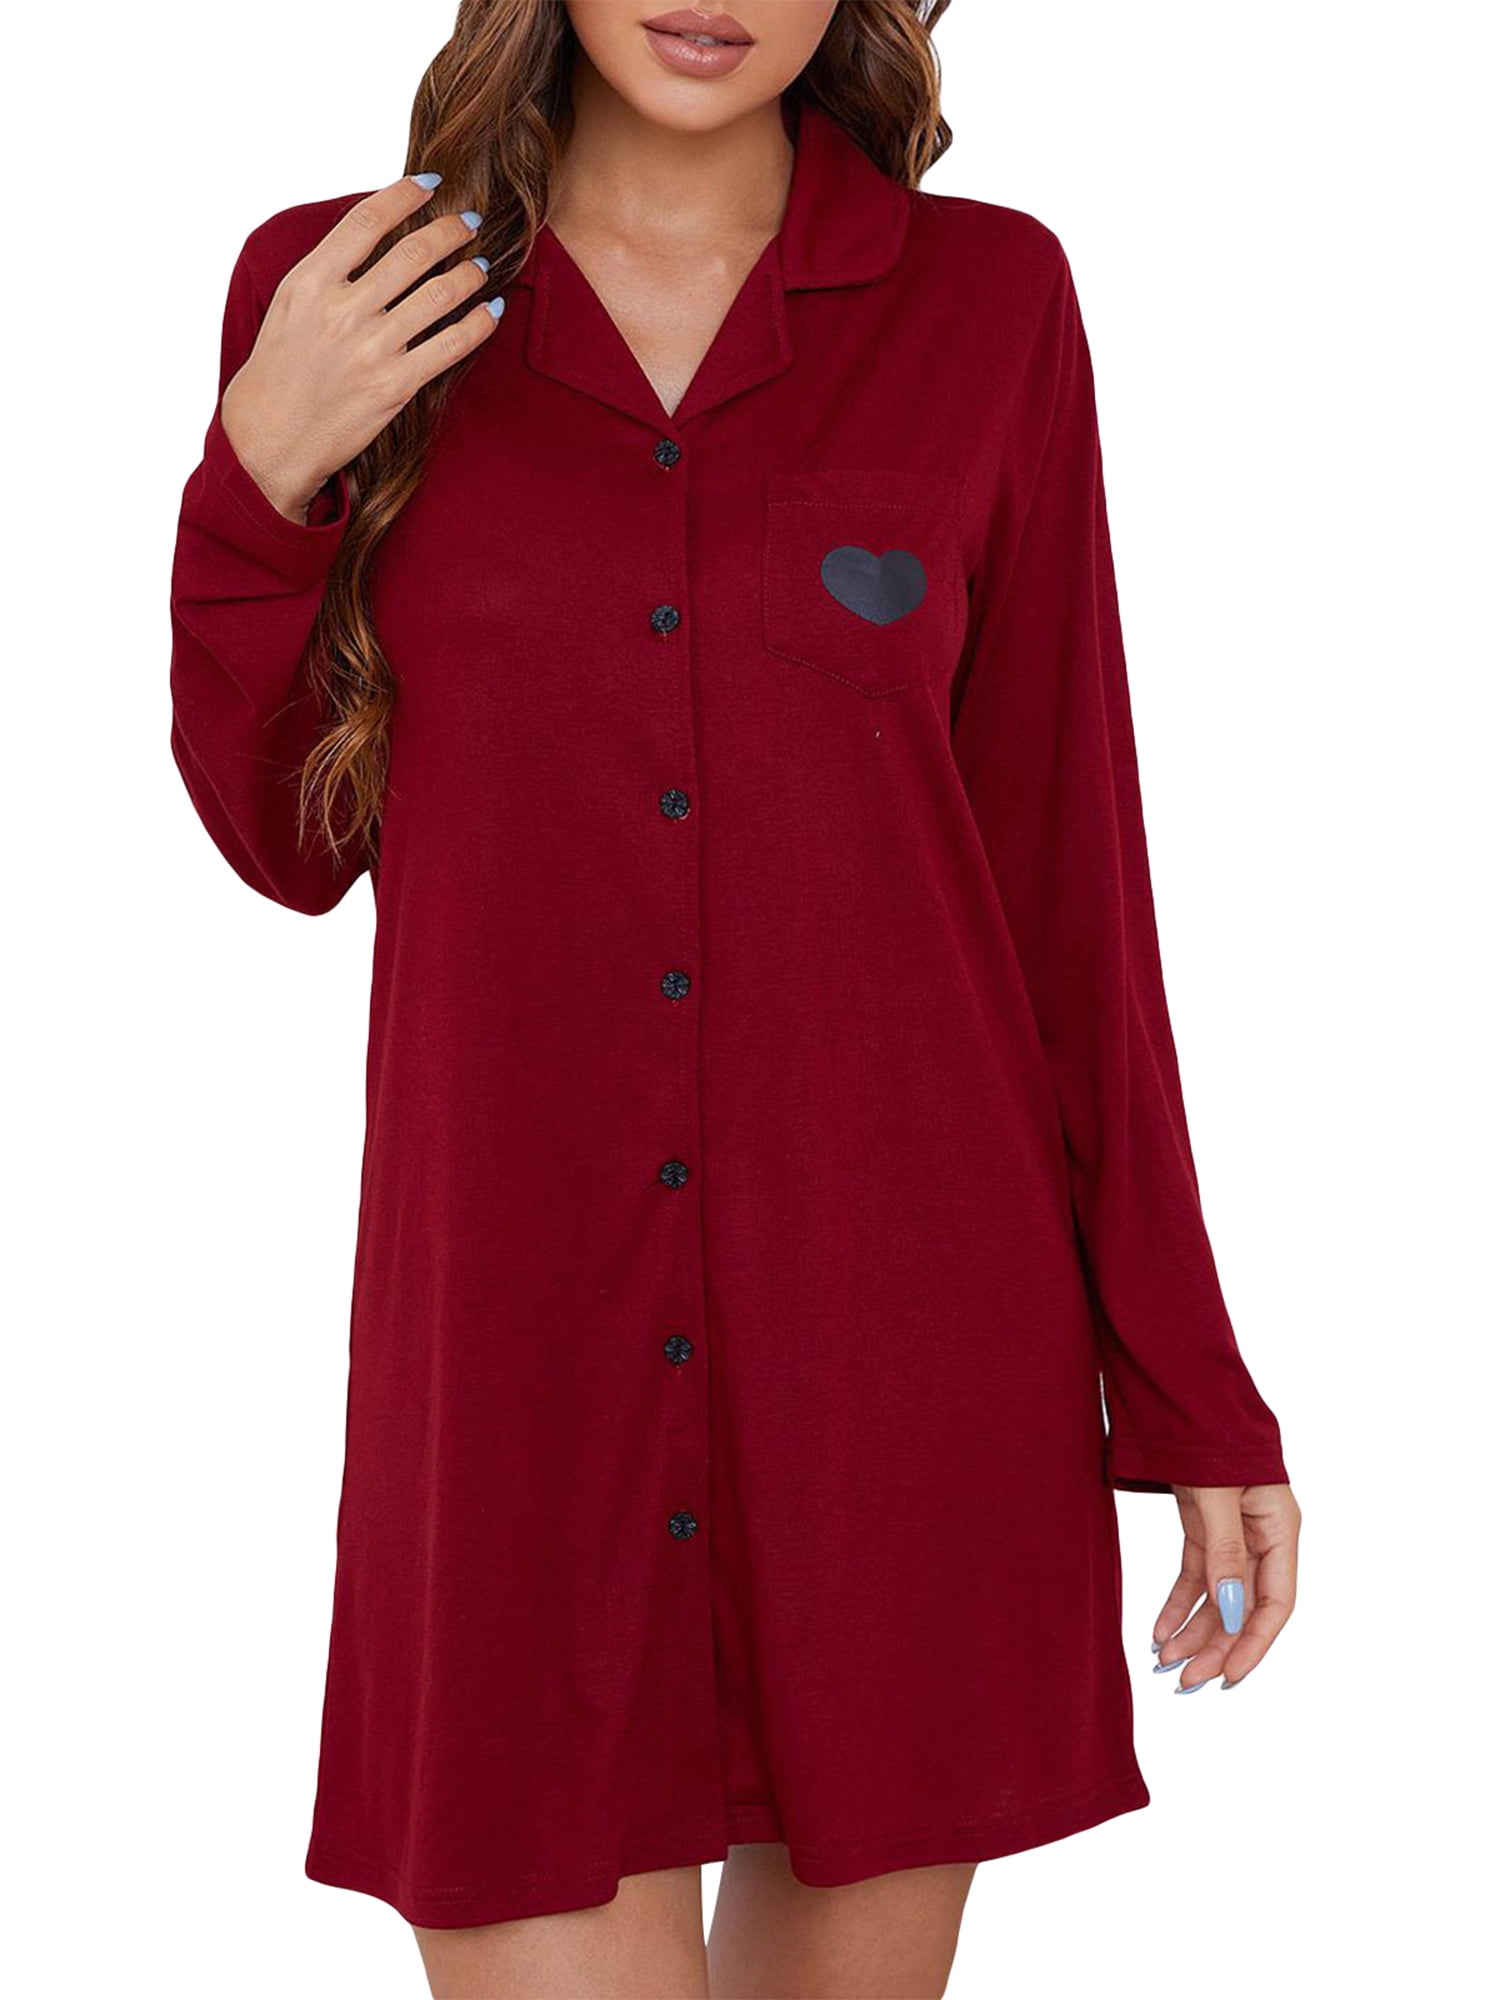 Biezeib Women's Nightgown Sleepwear Long Sleeve Button Down Nightshirt ...